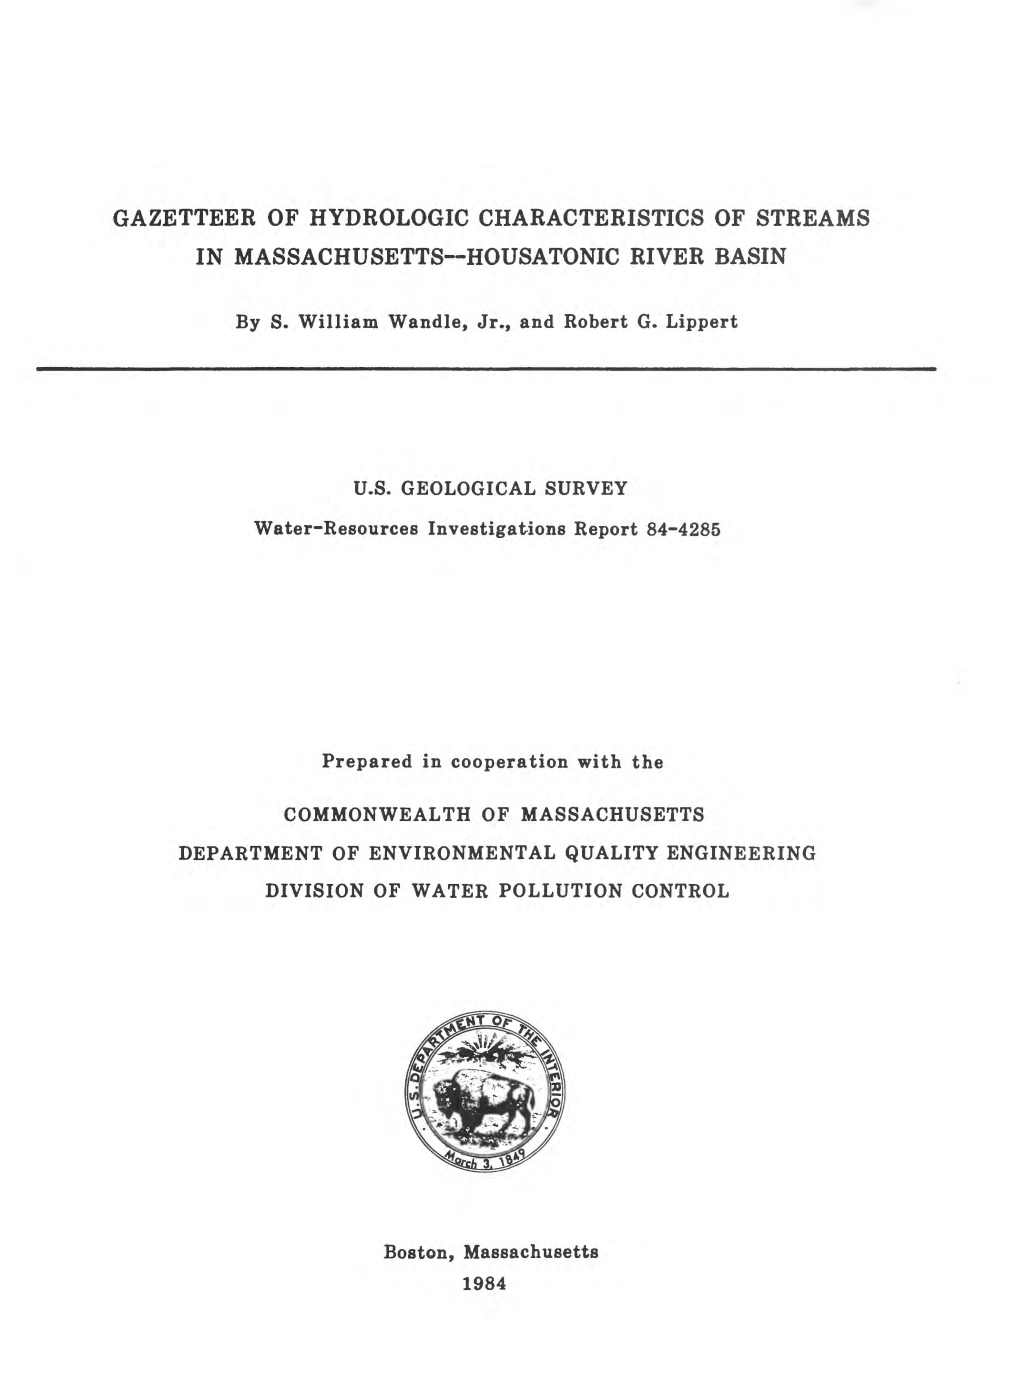 Gazetteer of Hydrologic Characteristics of Streams in Massachusetts Housatonic River Basin